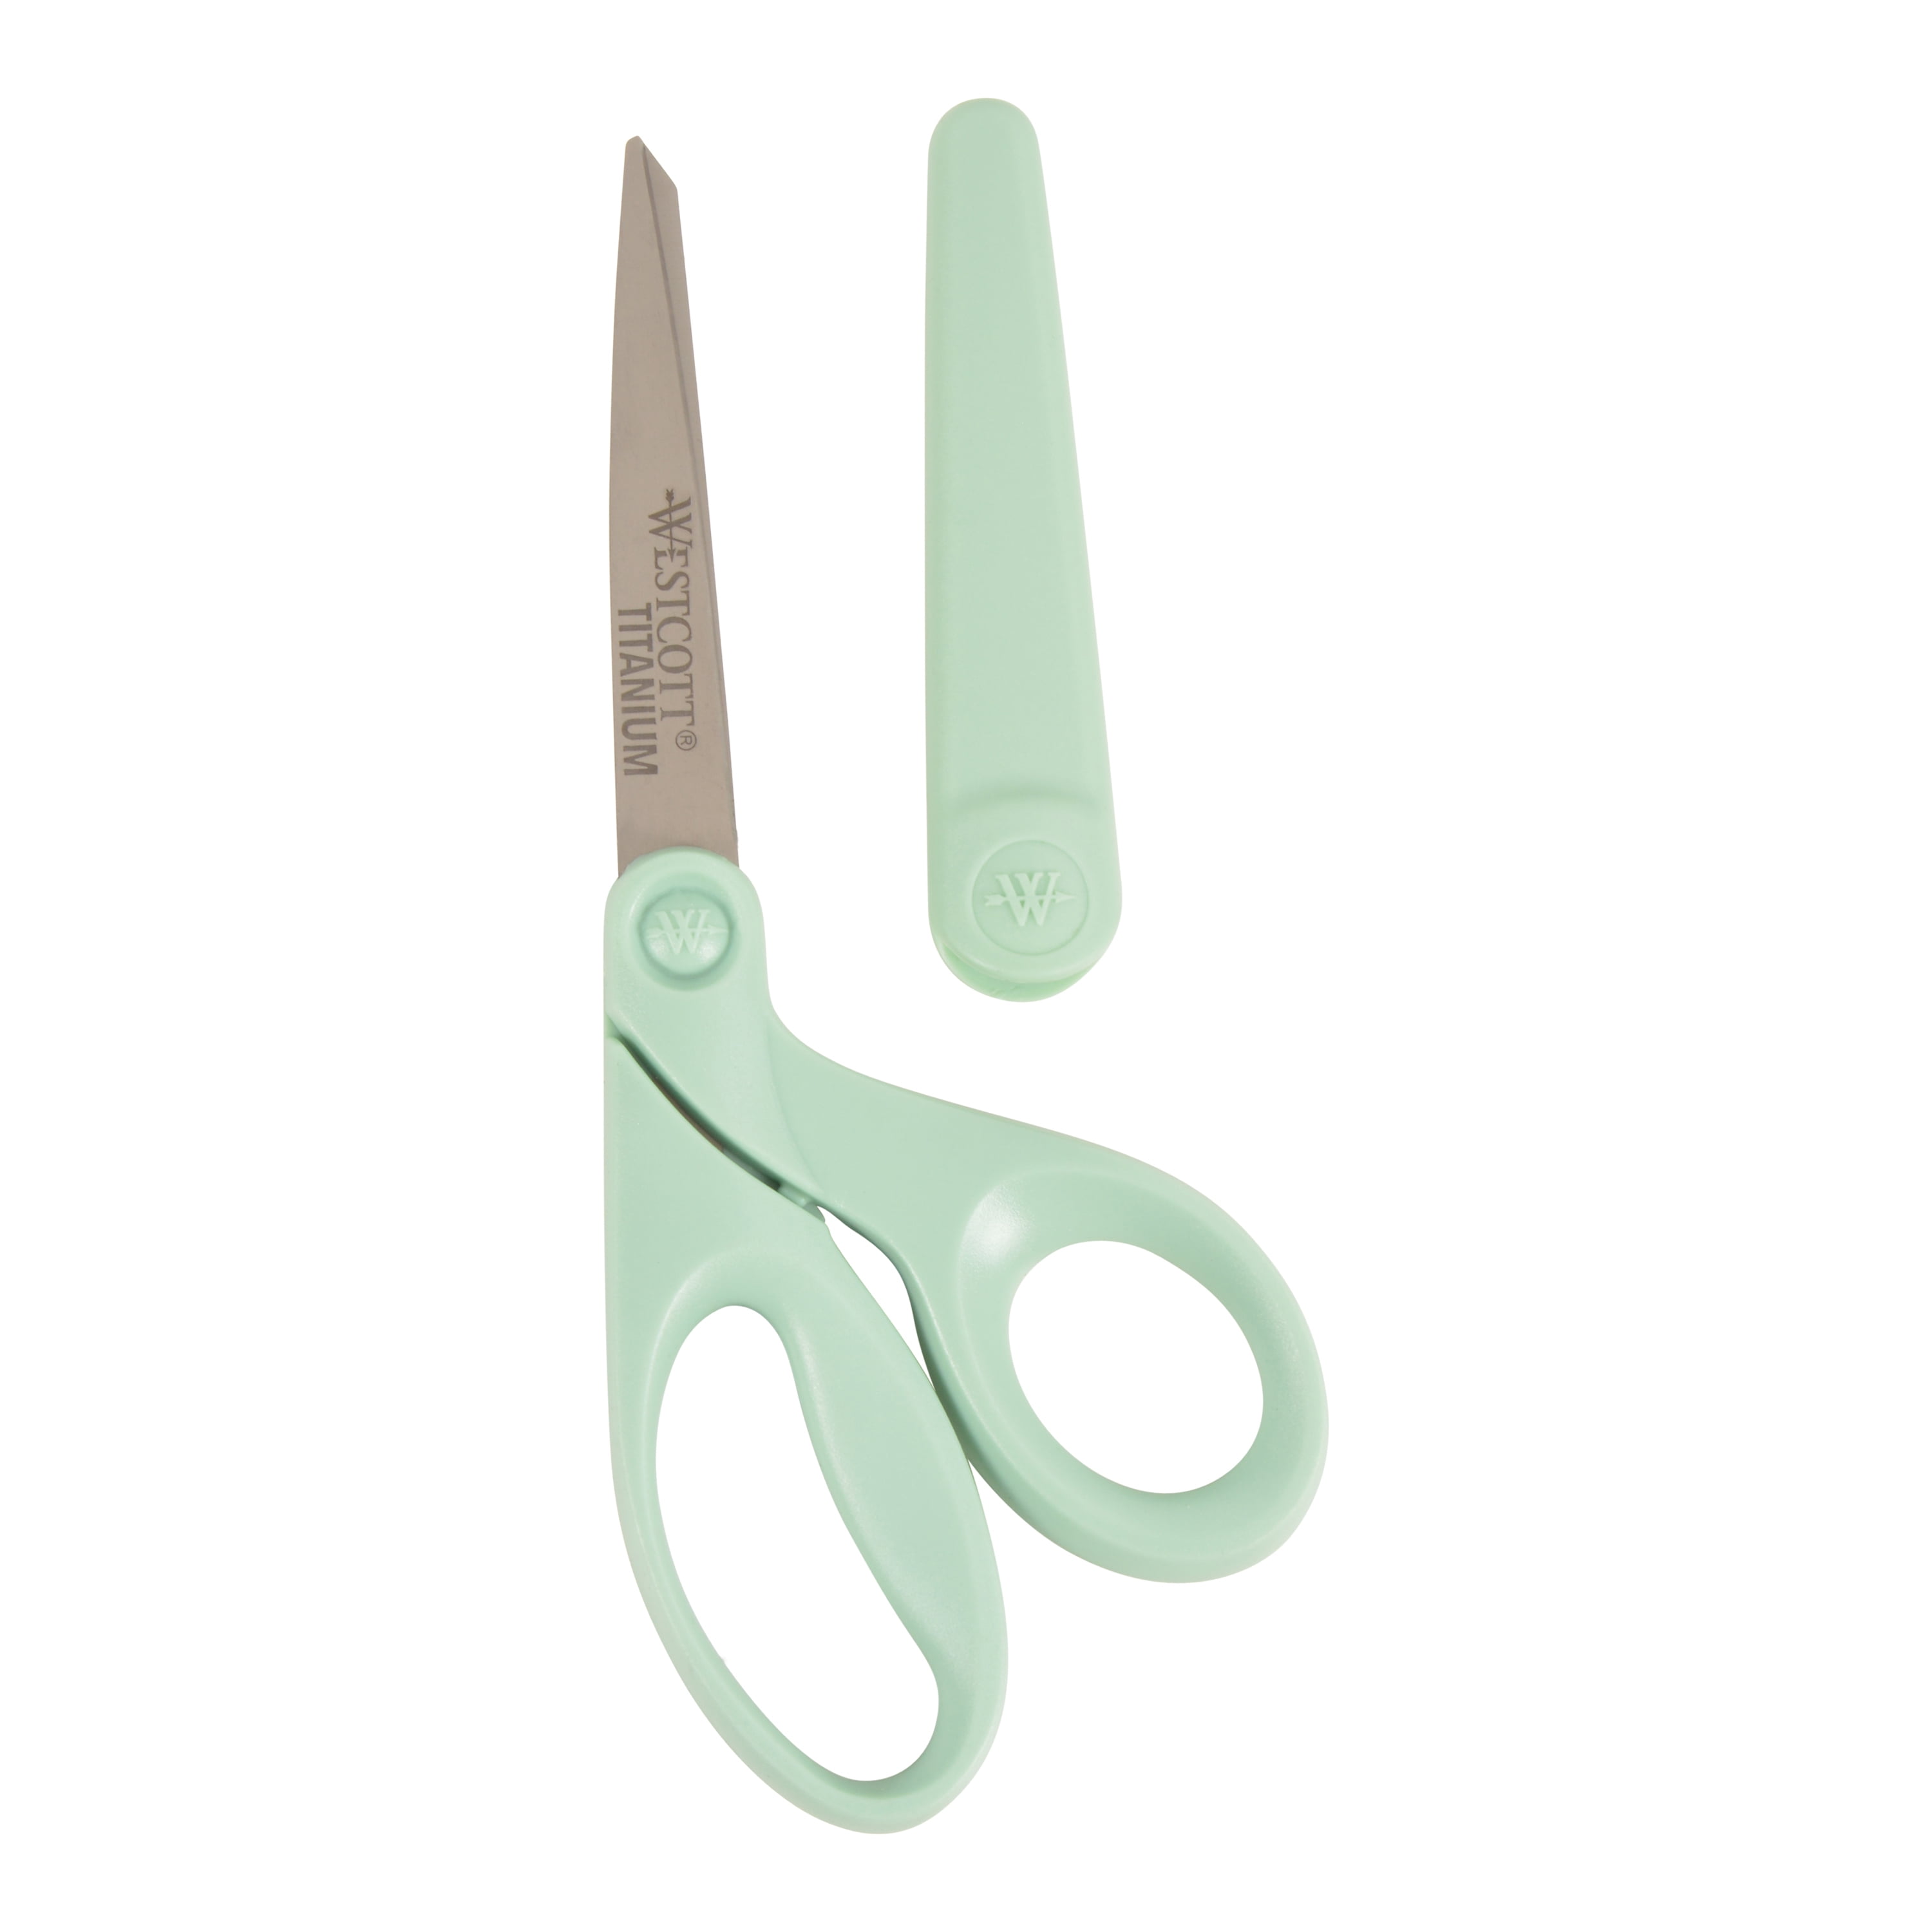  Westcott Scissors with Microban Handles, 8